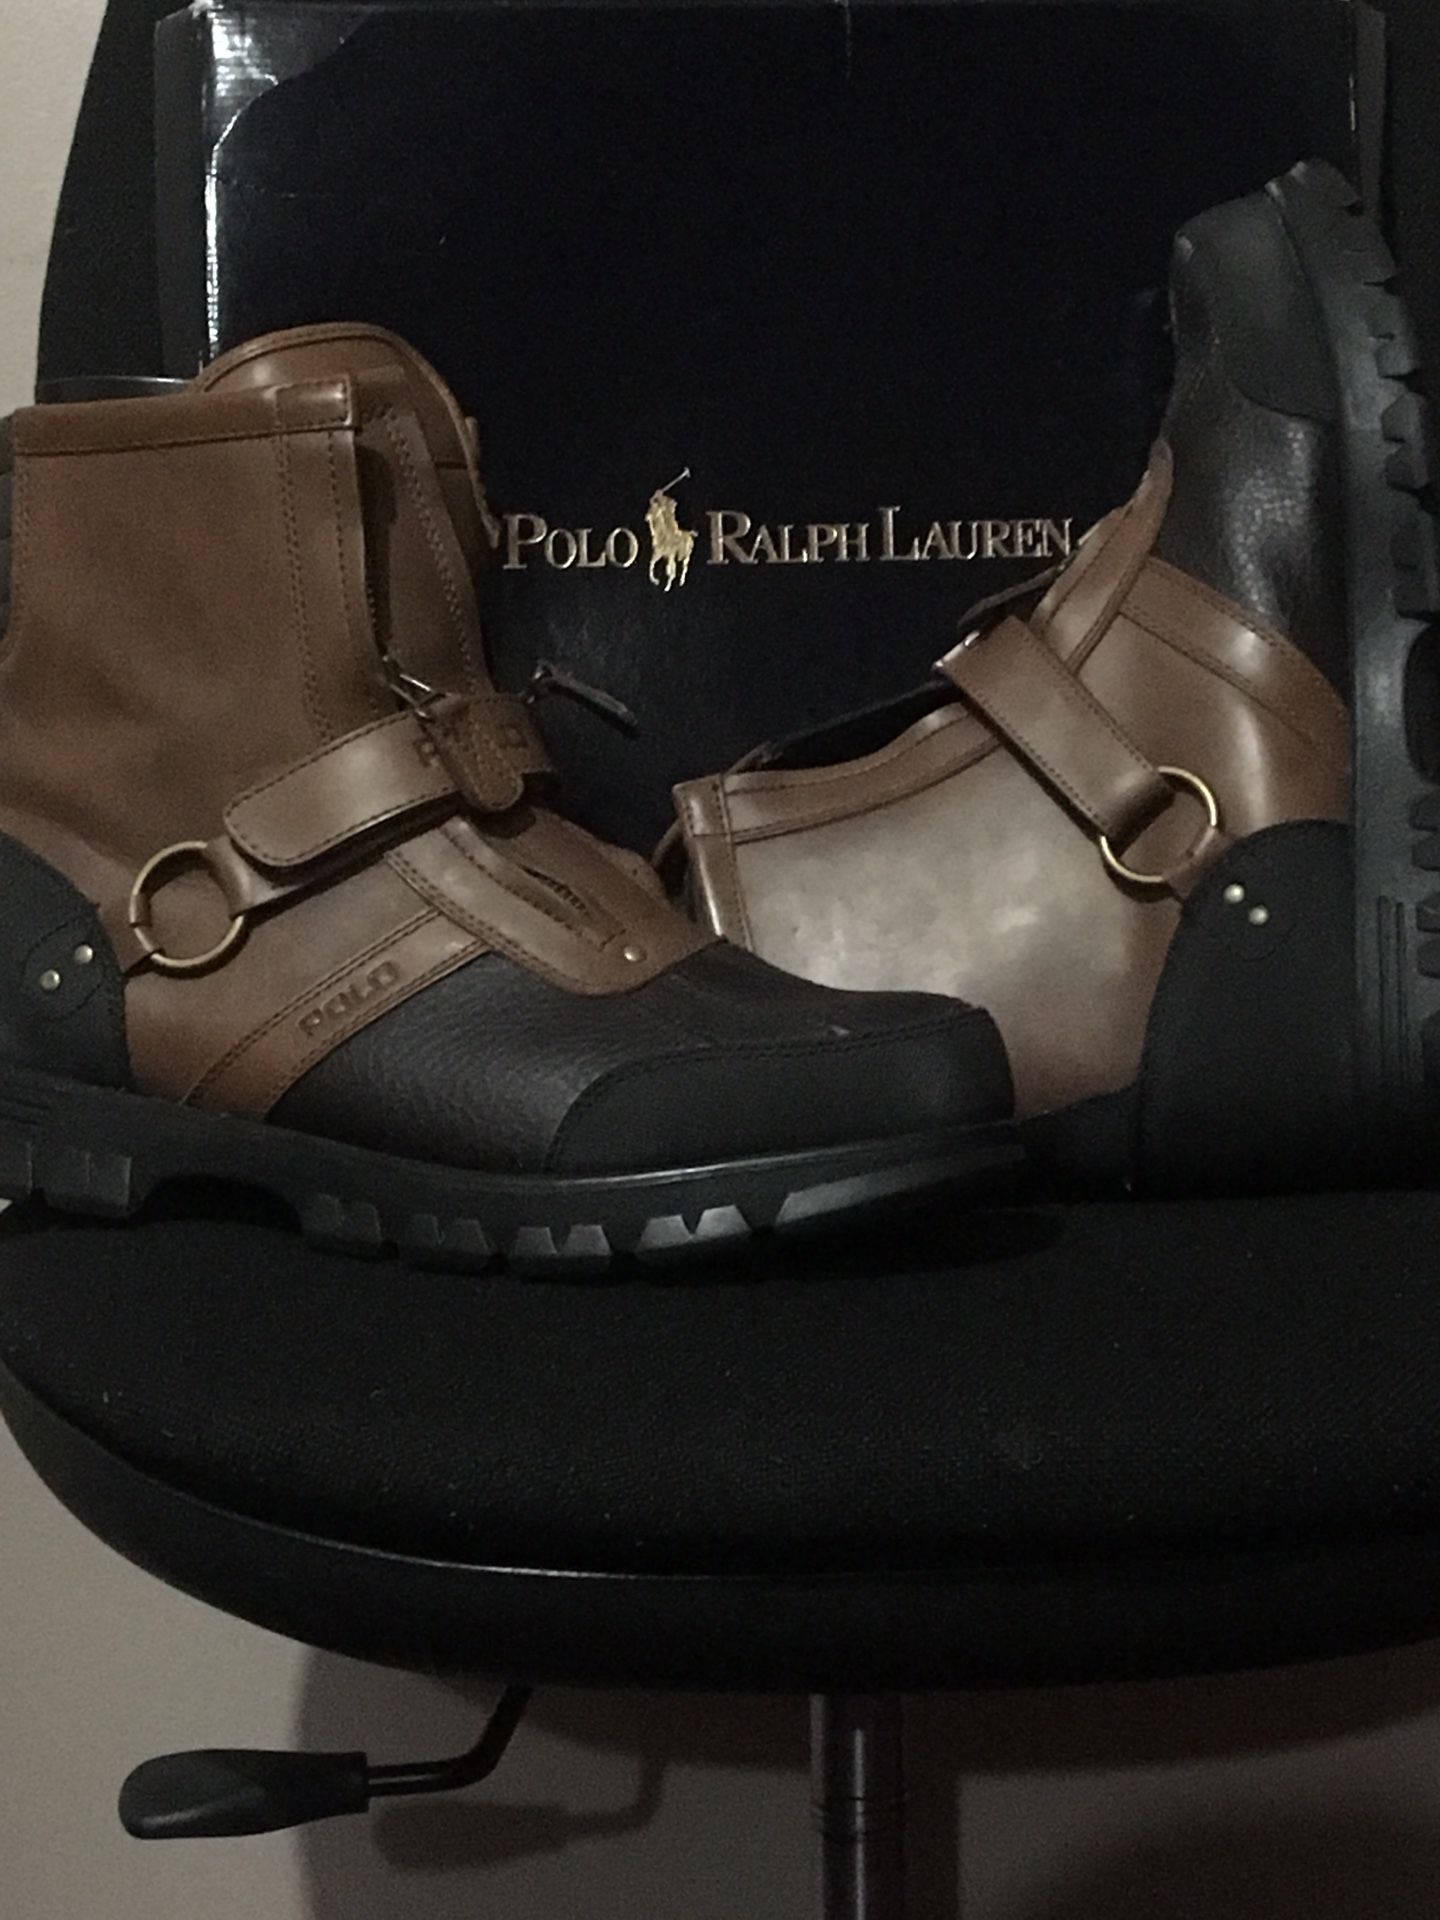 Polo Ralph Lauren Boots (size 12)